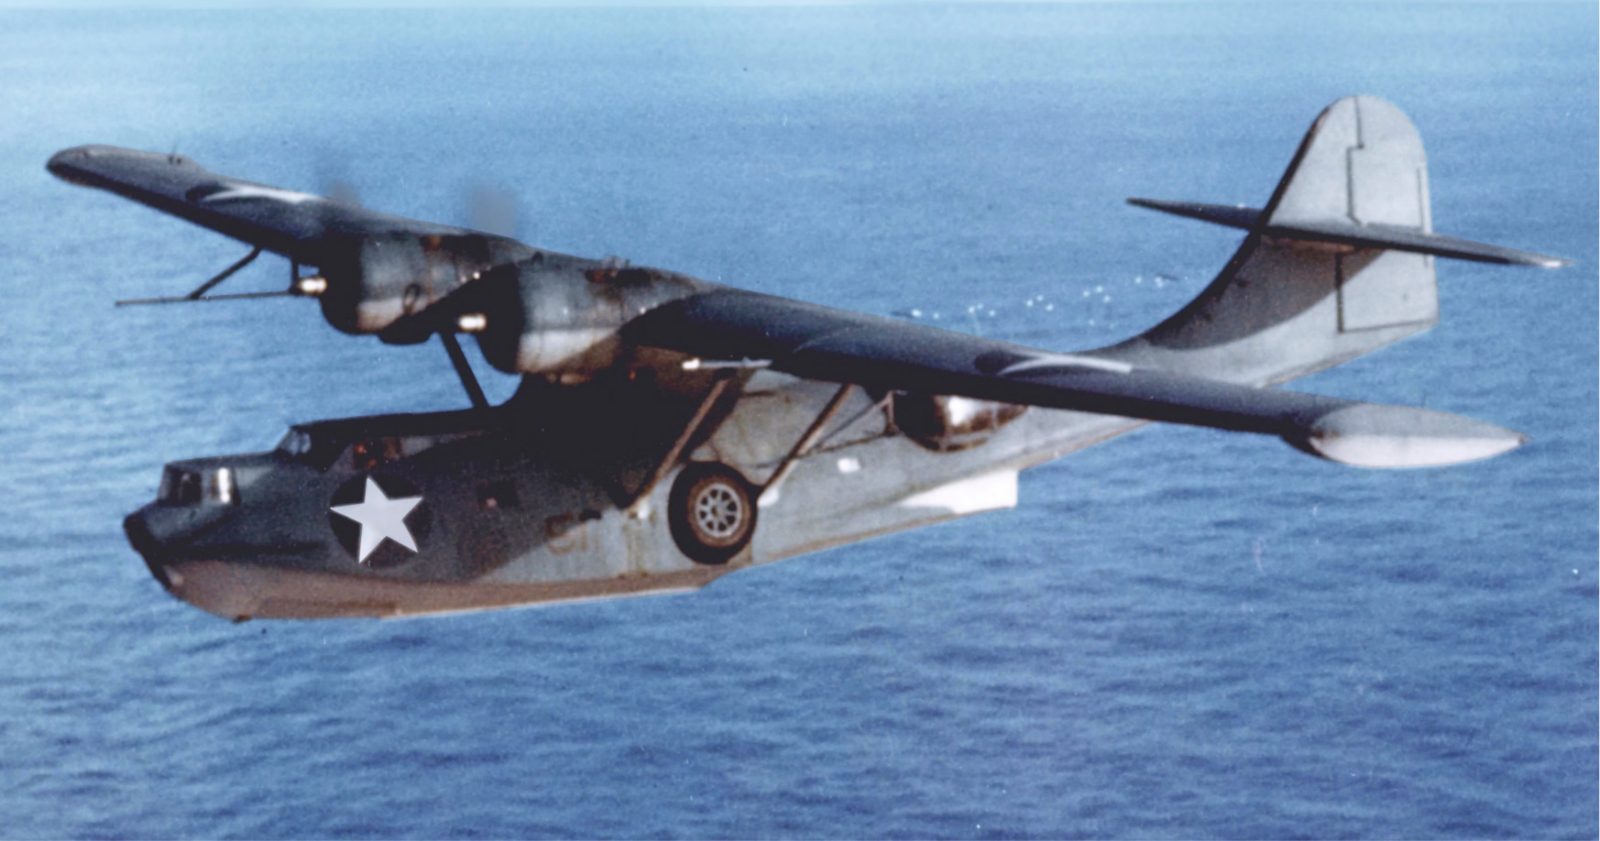 Amazing planes of World War II (Part 2)